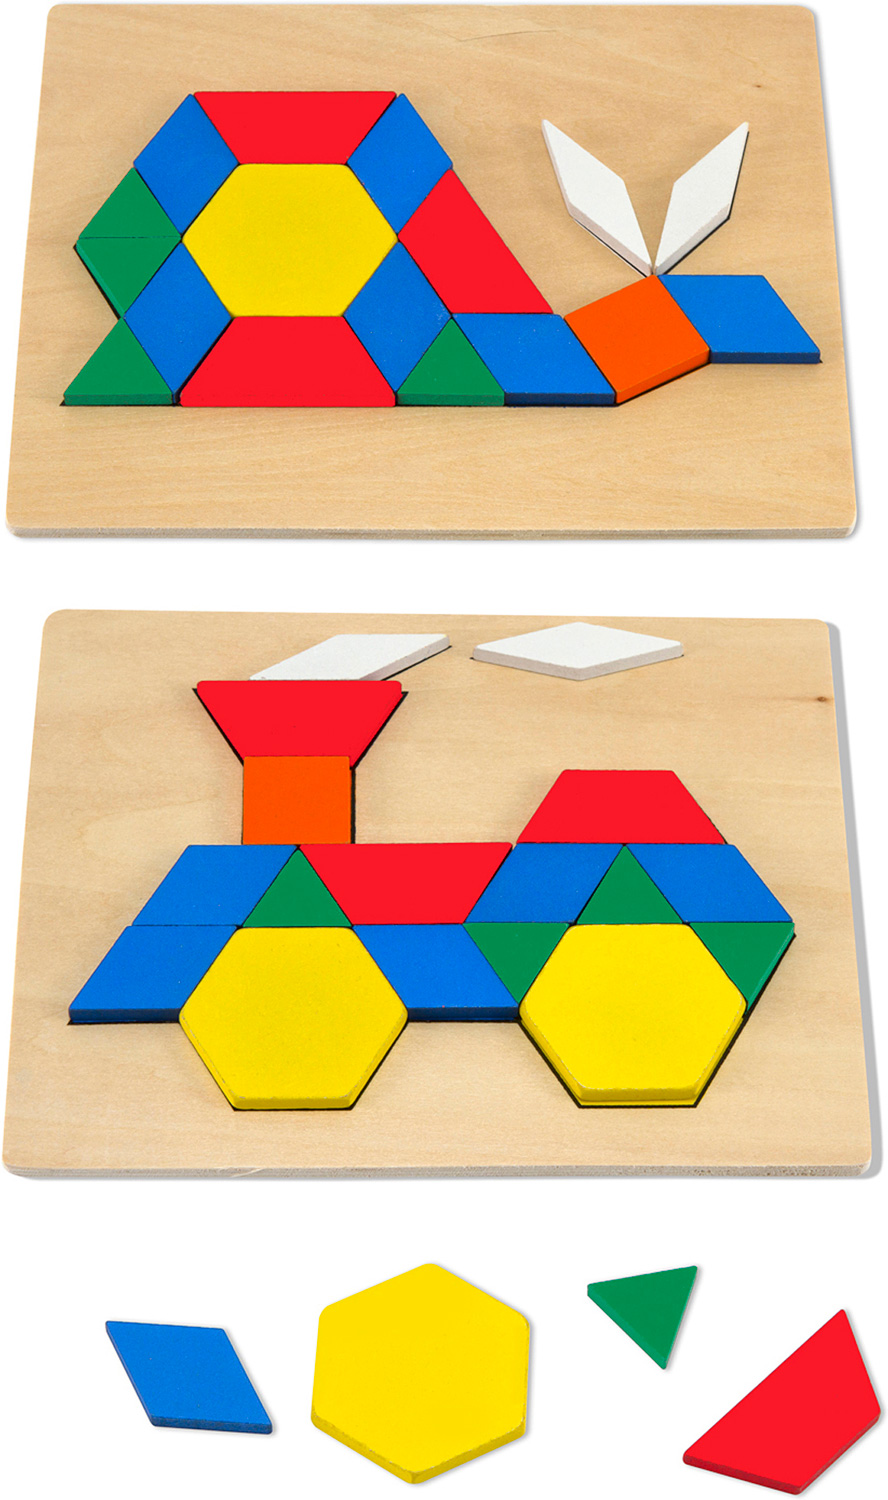 pattern-blocks-and-boards-building-blocks